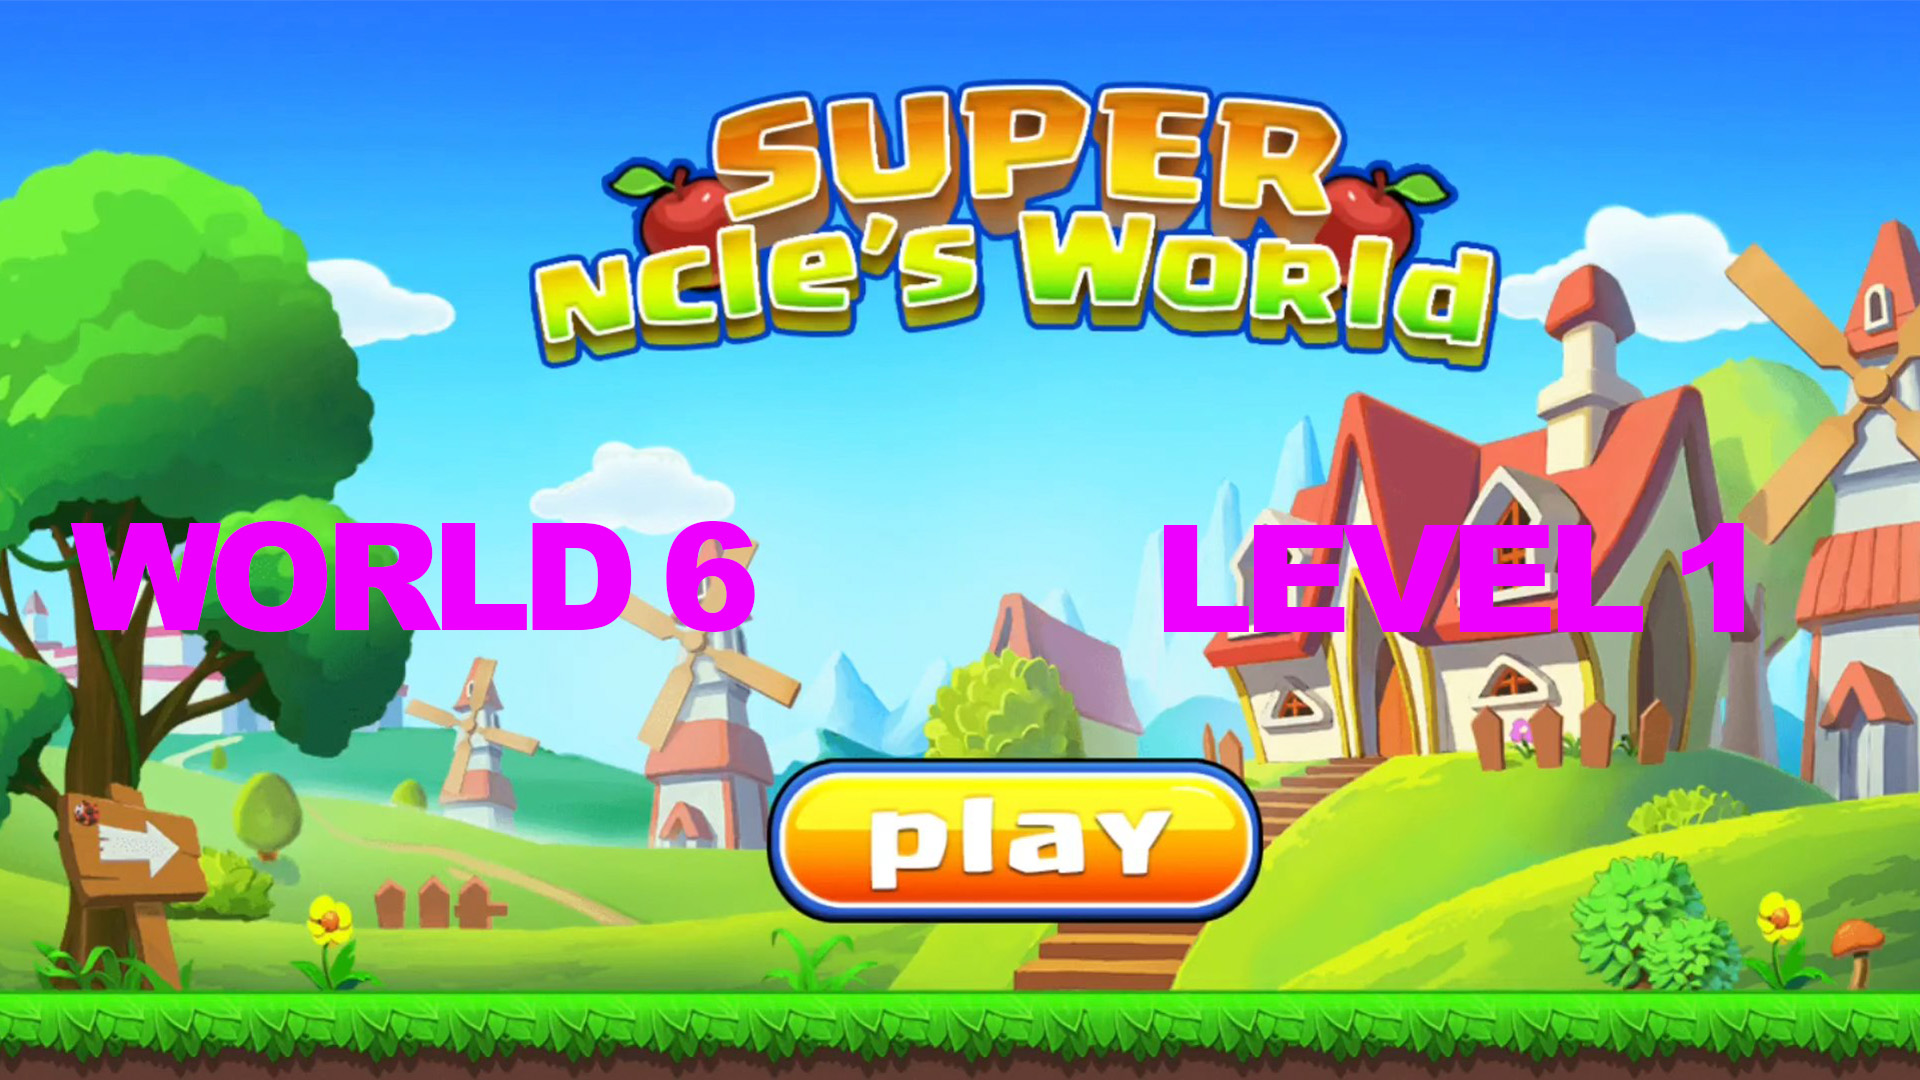 Super ncle's  World 6. Level 1.